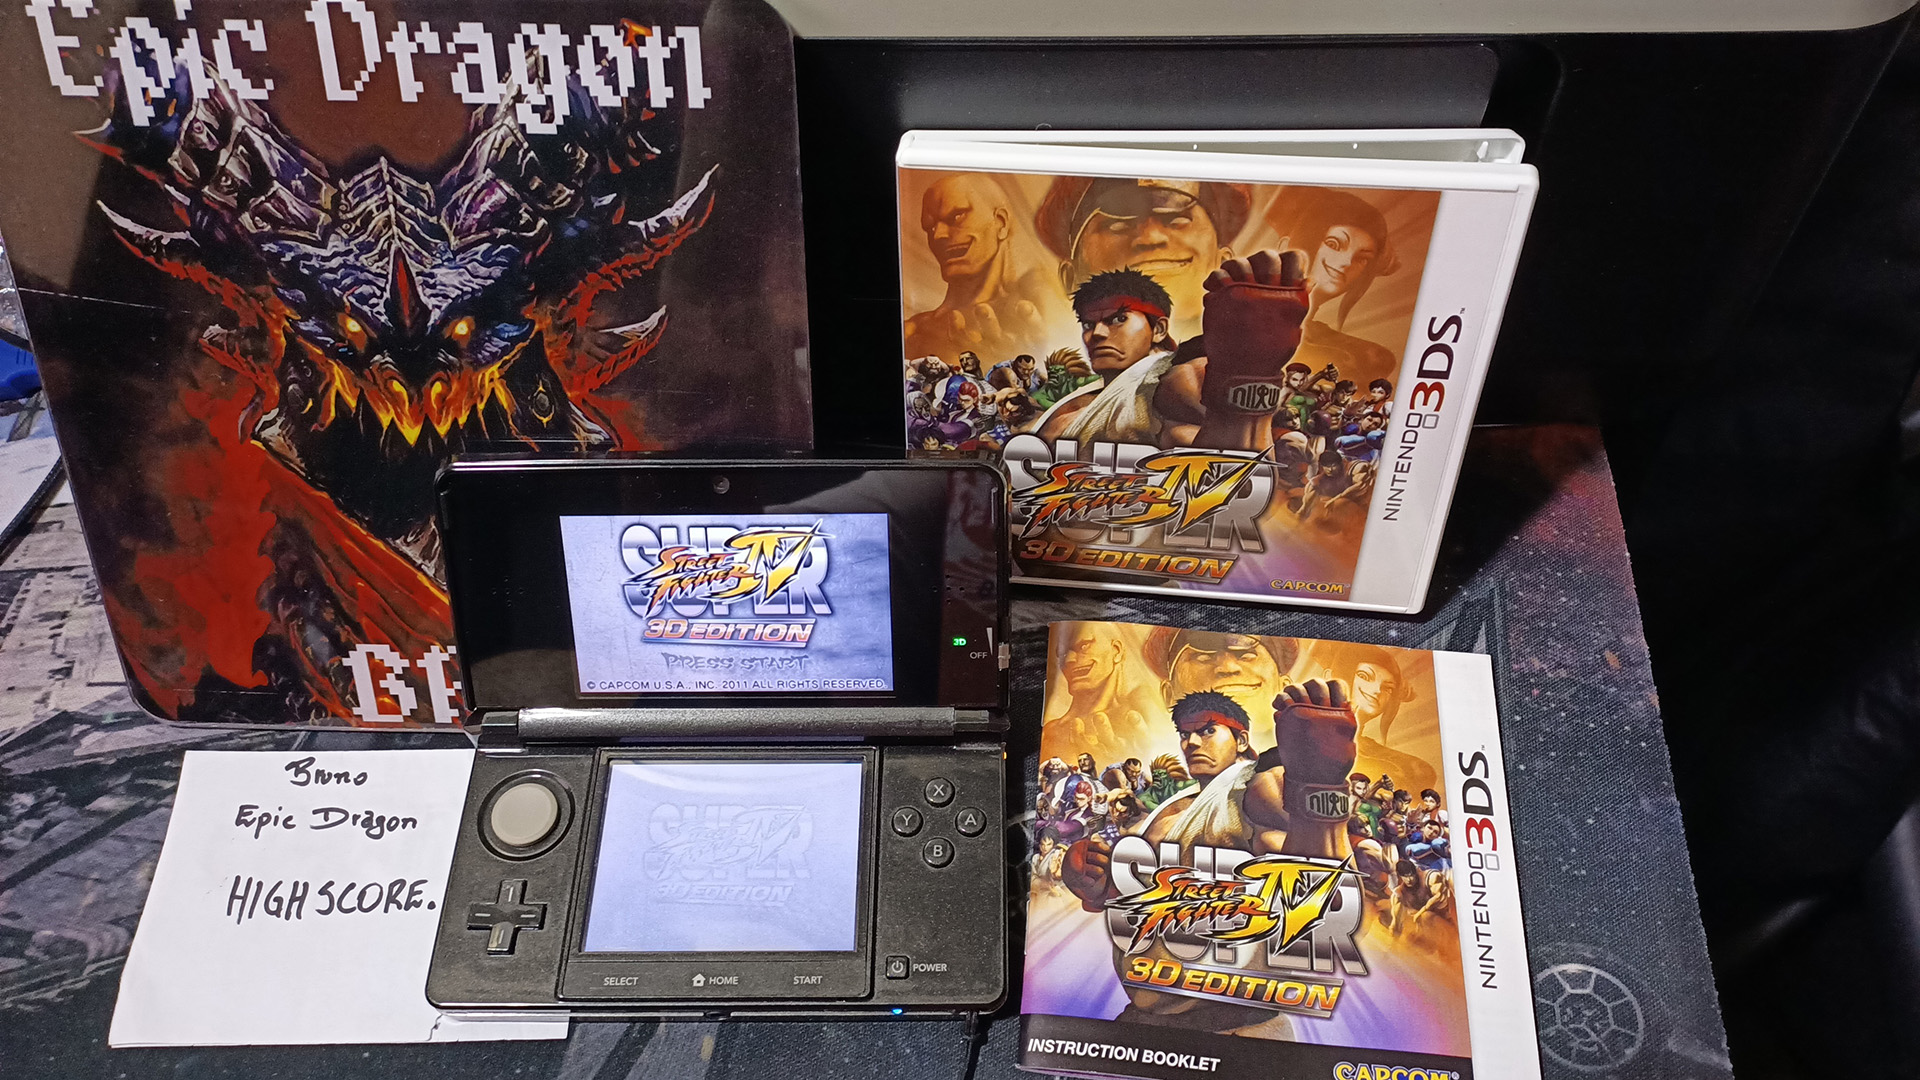 EpicDragon: Super Street Fighter IV 3D Edition: Arcade: M. Bison [Vega in Japanese Version] (Nintendo 3DS) 965,100 points on 2022-08-11 17:30:48